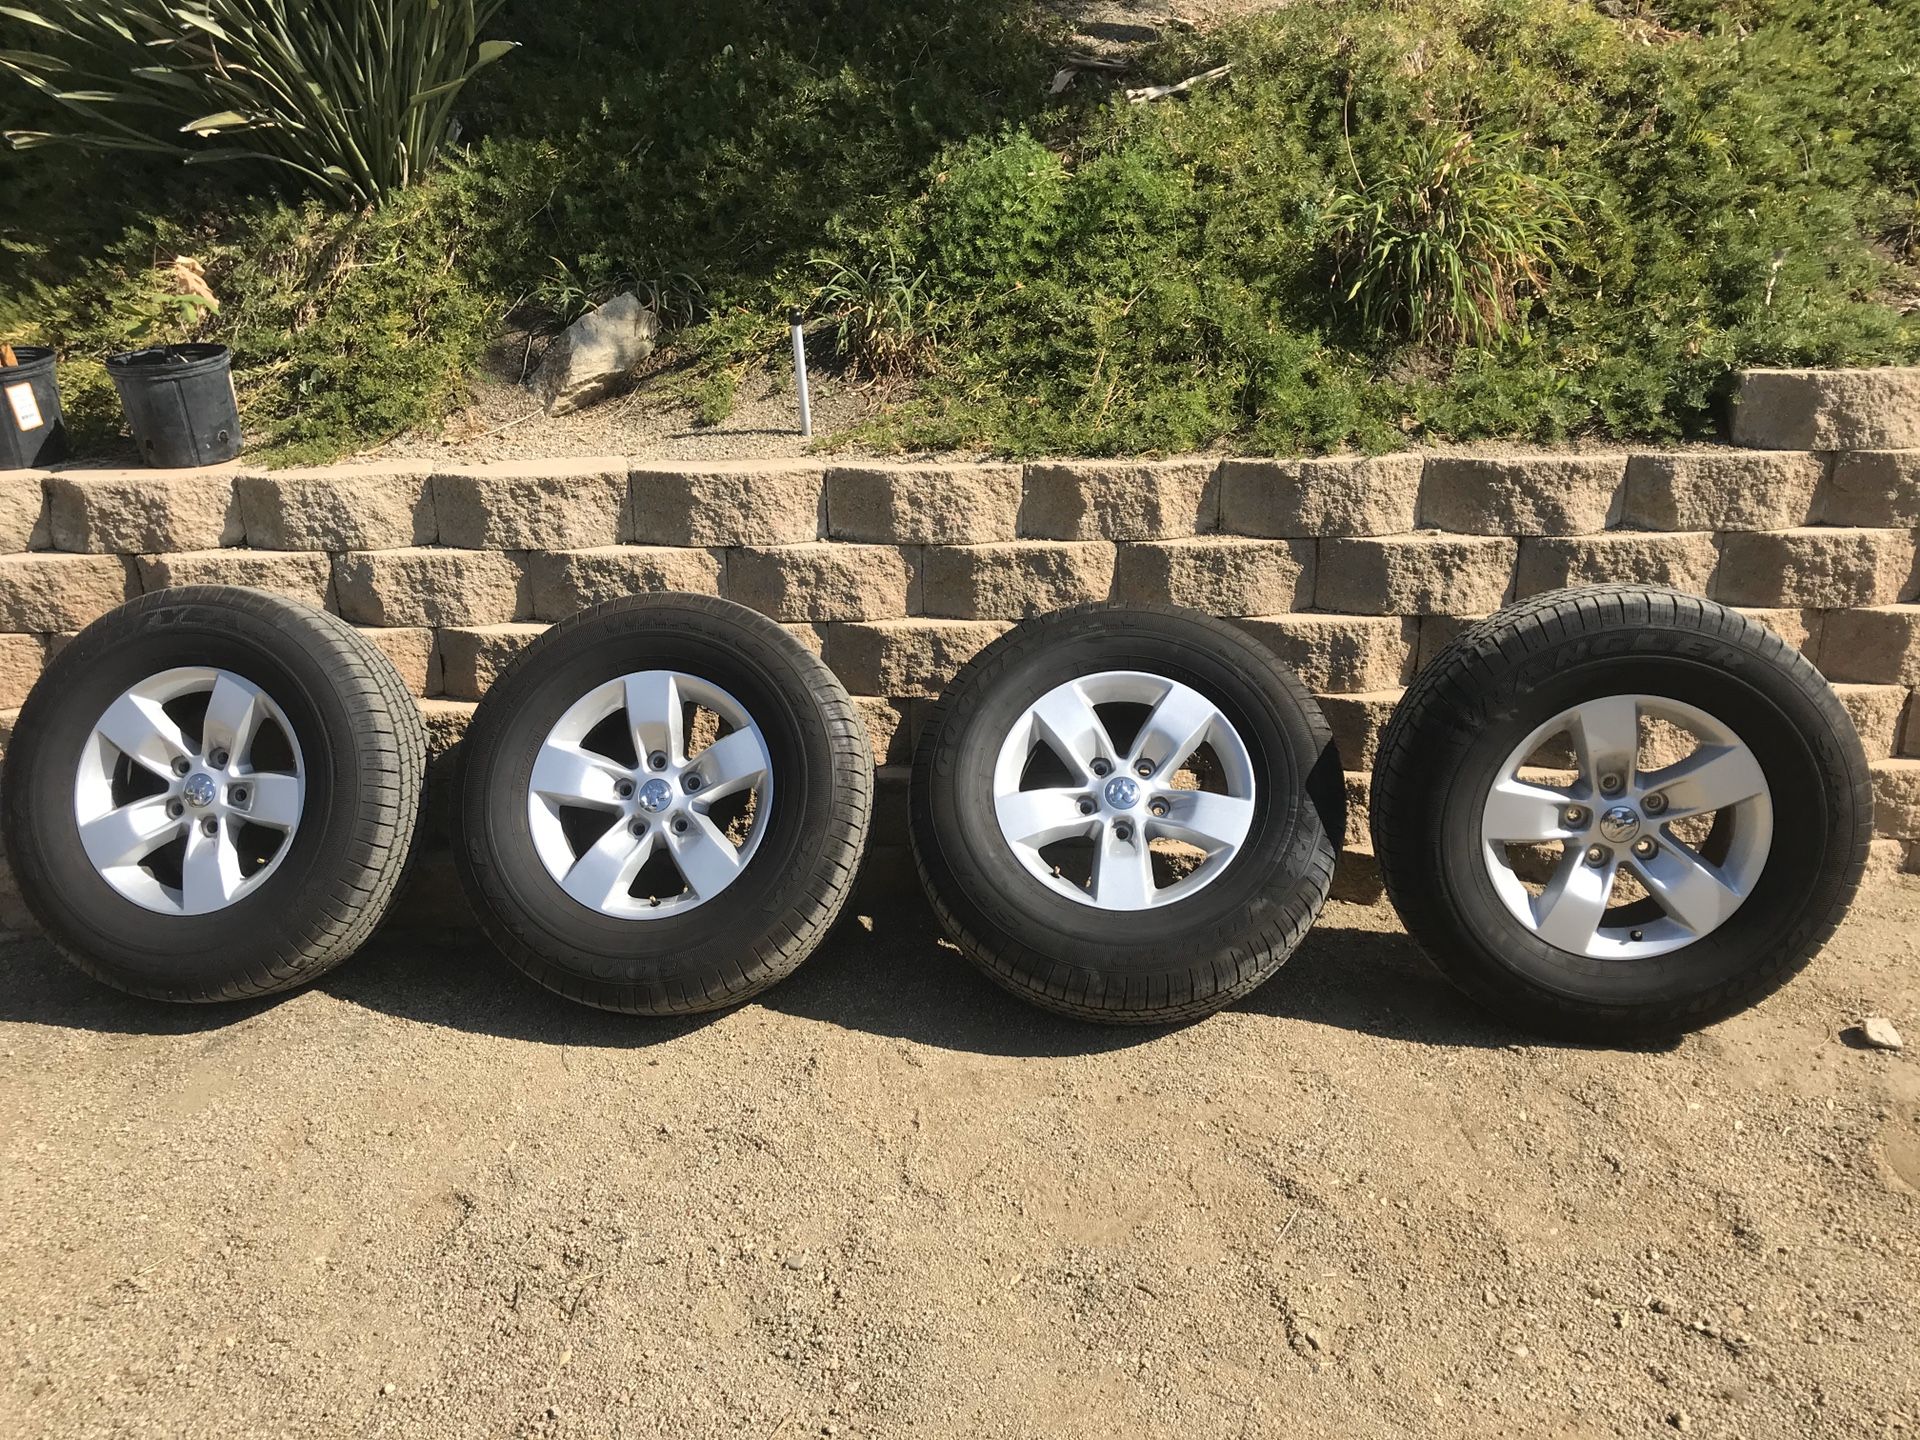 2019 Ram 1500 Wheels (5000 miles on new tires)